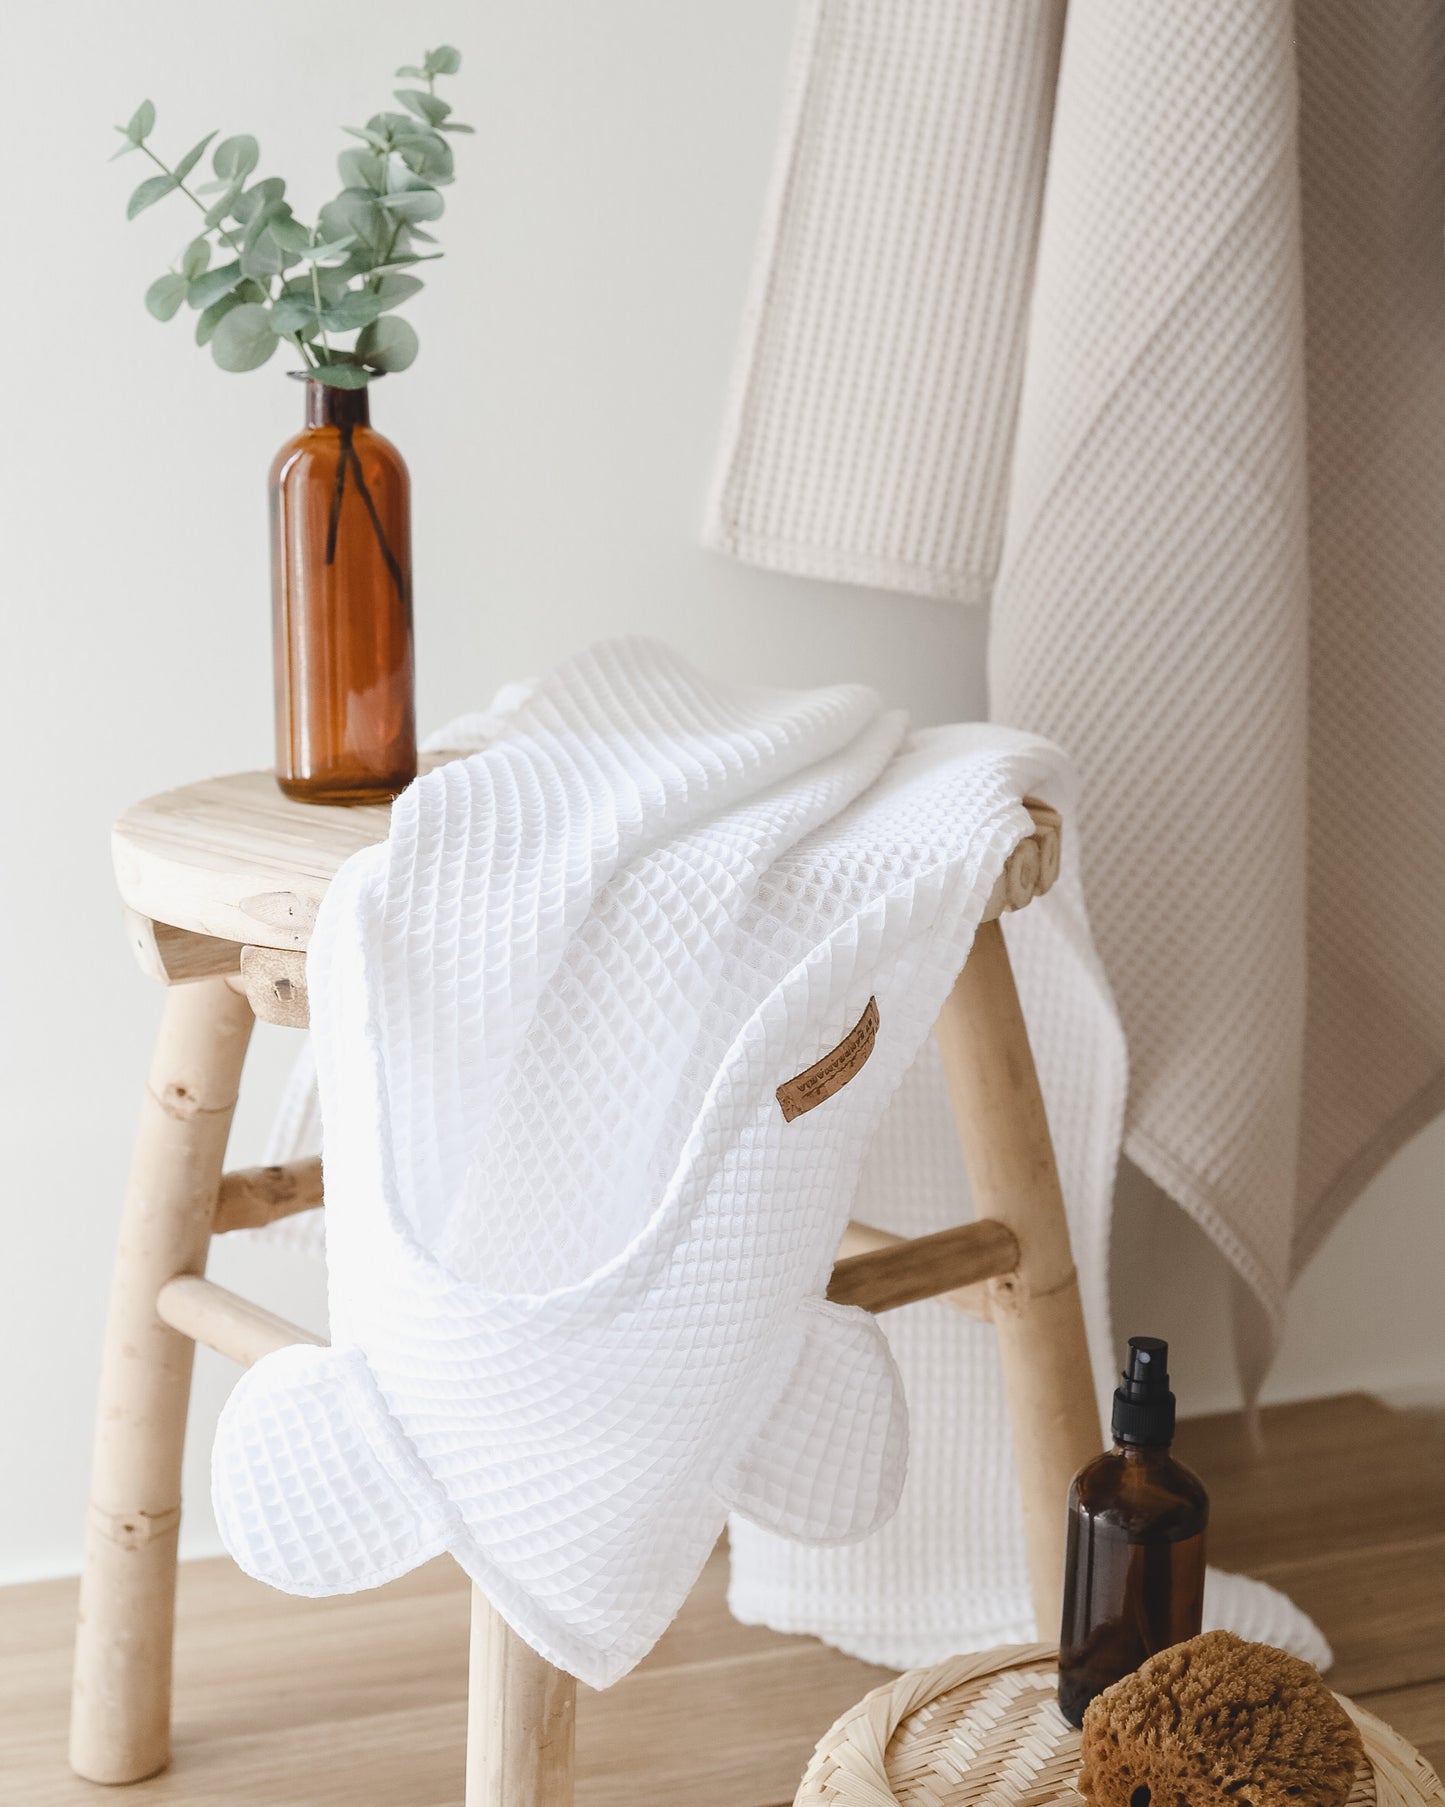 Badis – the Hooded Baby Towel